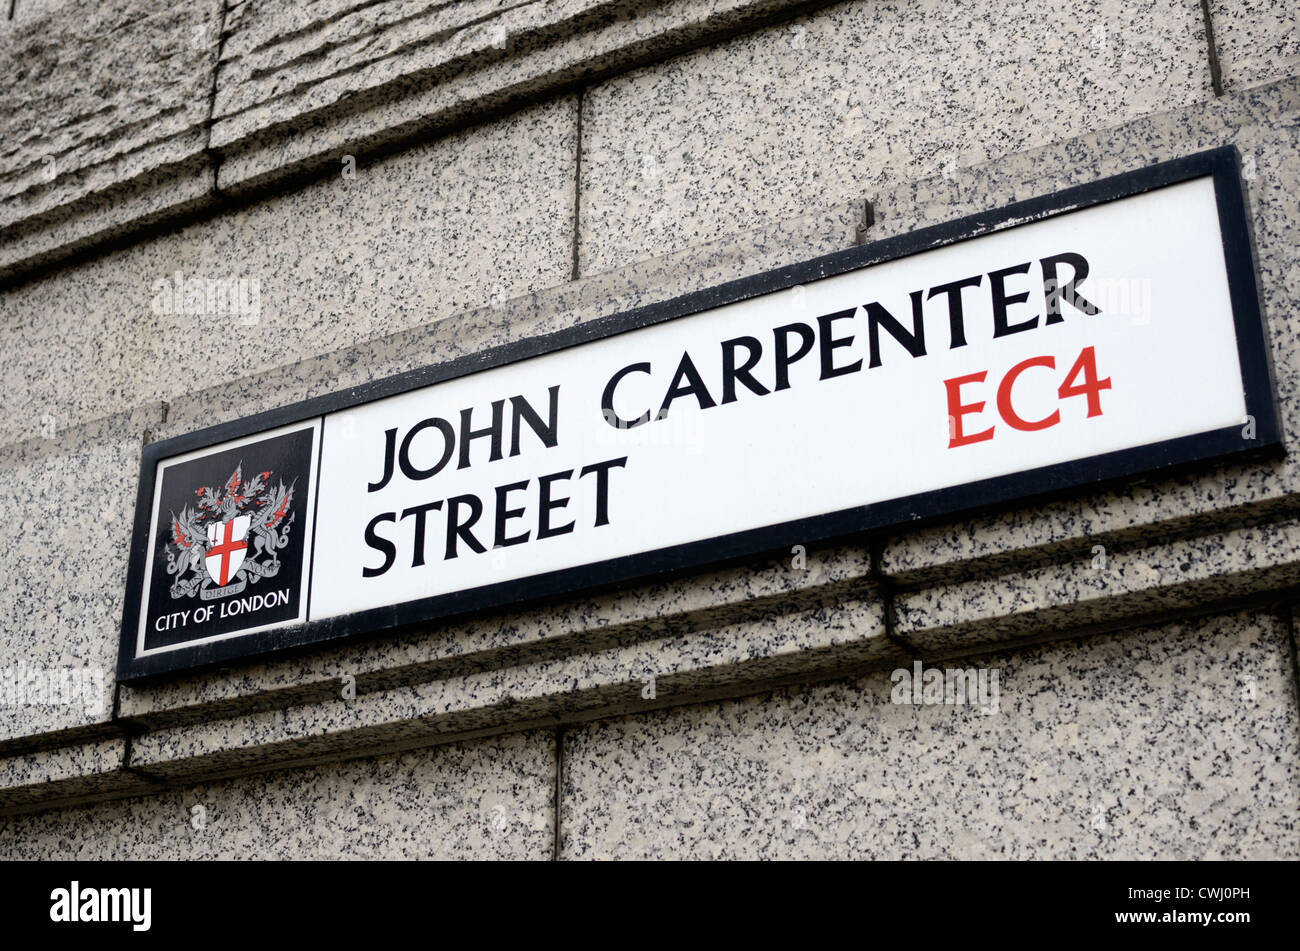 John Carpenter Street EC4 street sign, London, England Stock Photo